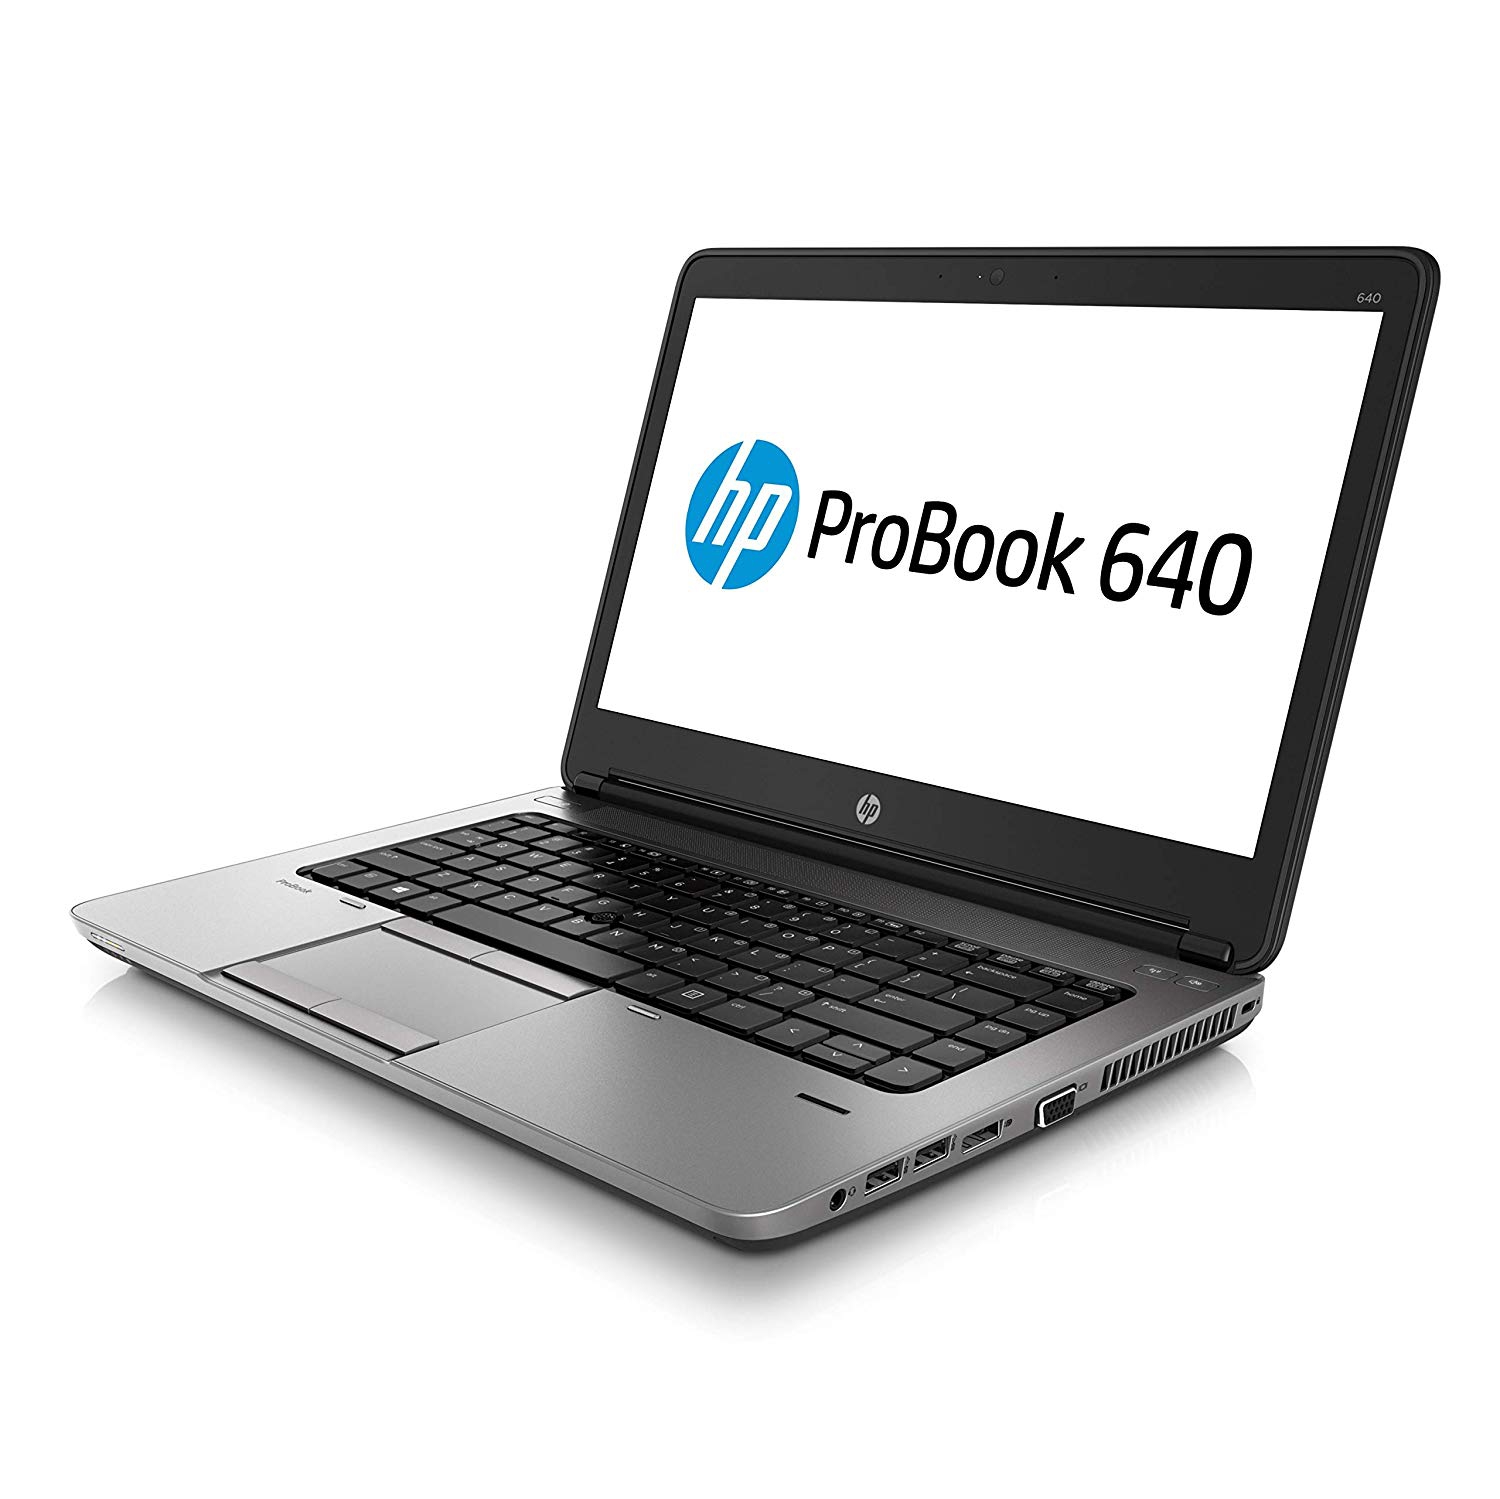 Refurbished (Good) - HP ProBook 640 G1 Laptop: Intel Core i5 - 4200m 2.50GHz, 8GB RAM, 256GB SSD, 14"Â, DVDRW, Win 11 Home, NO Webcam